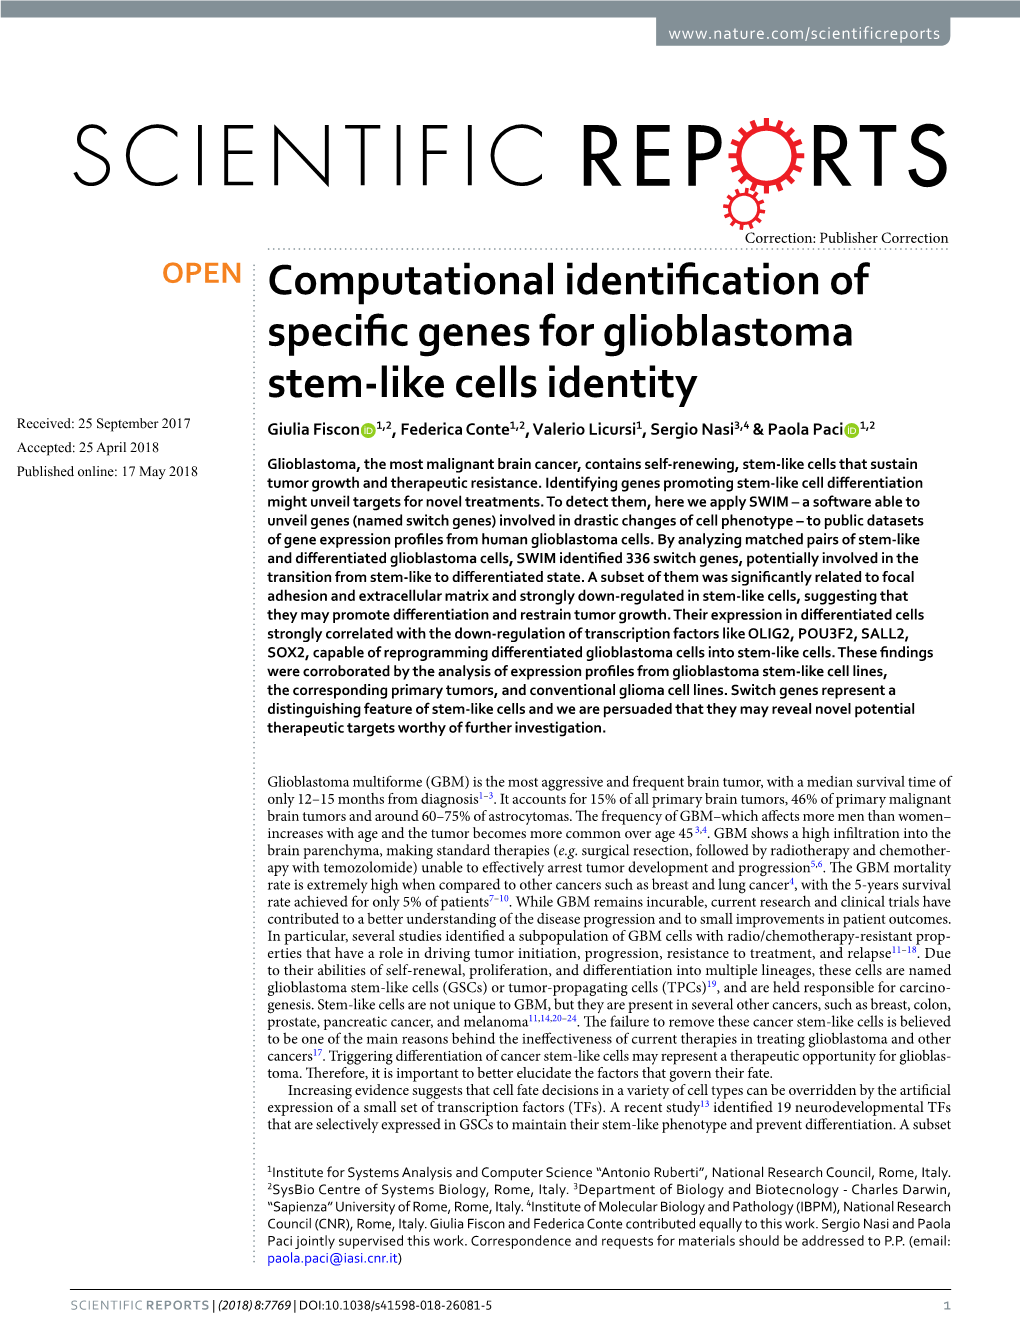 Computational Identification of Specific Genes for Glioblastoma Stem-Like